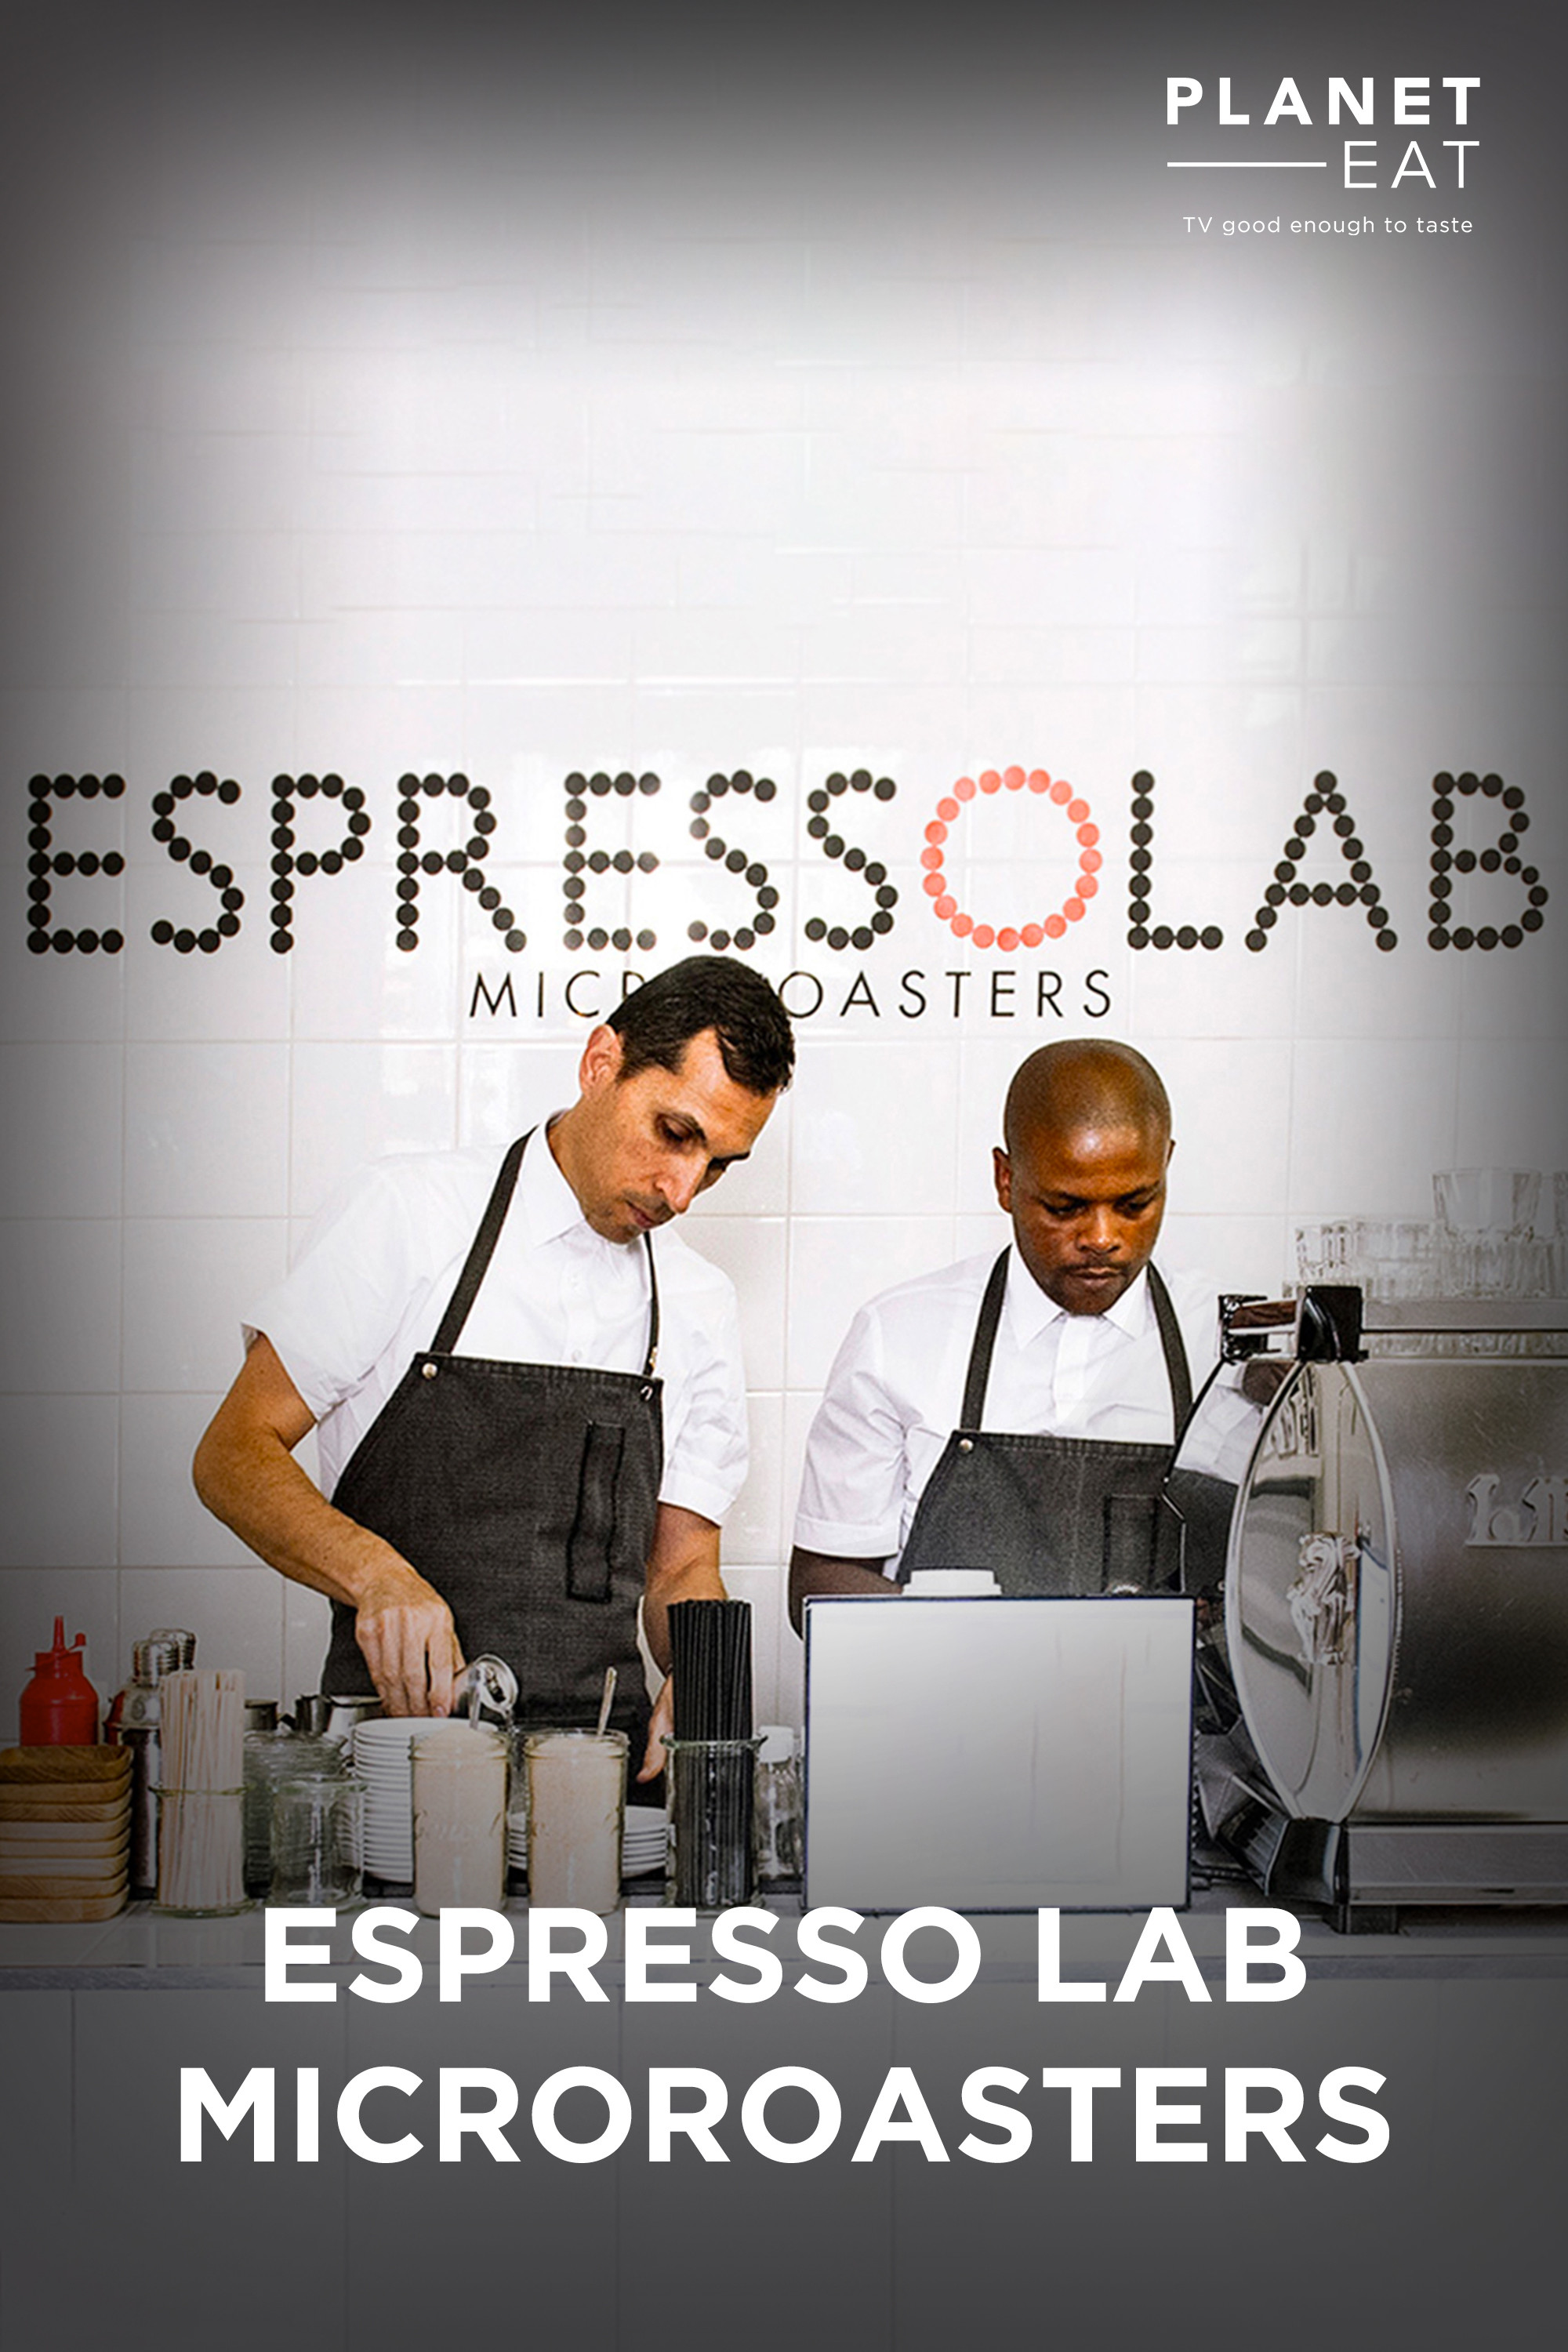 Espresso Lab Microroasters (Planet Eat)